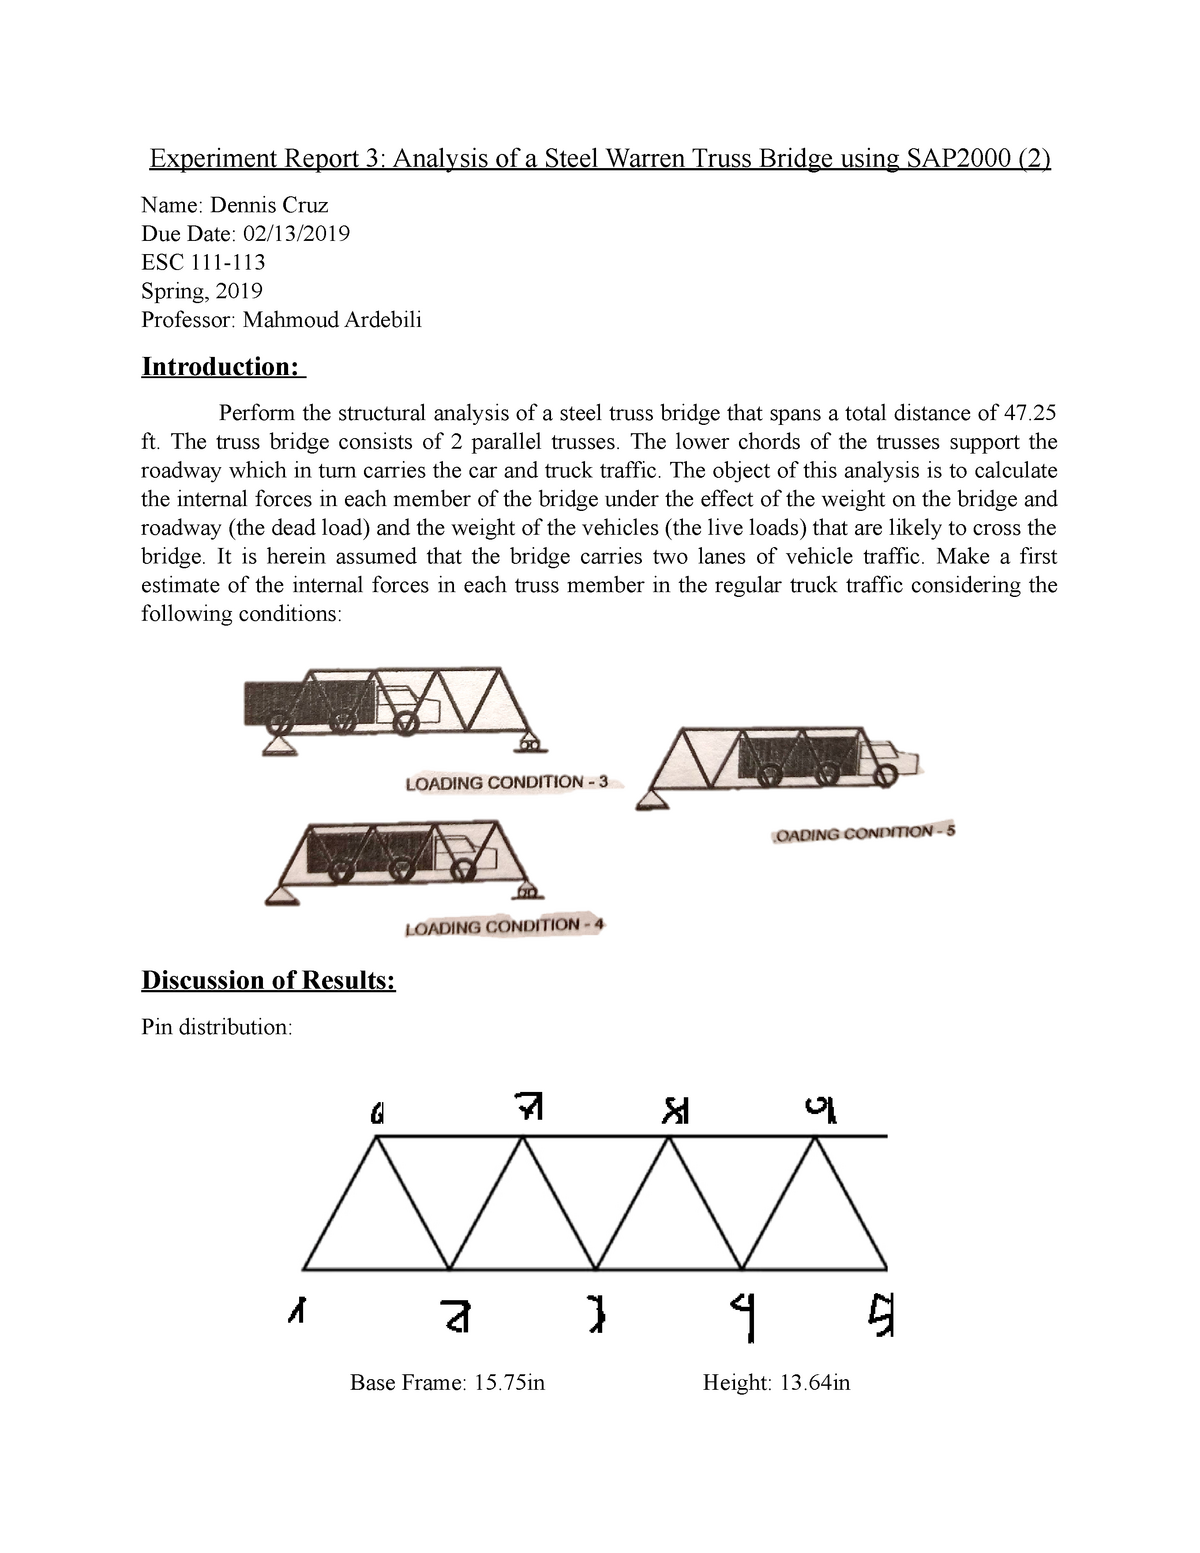 bridge research project pdf